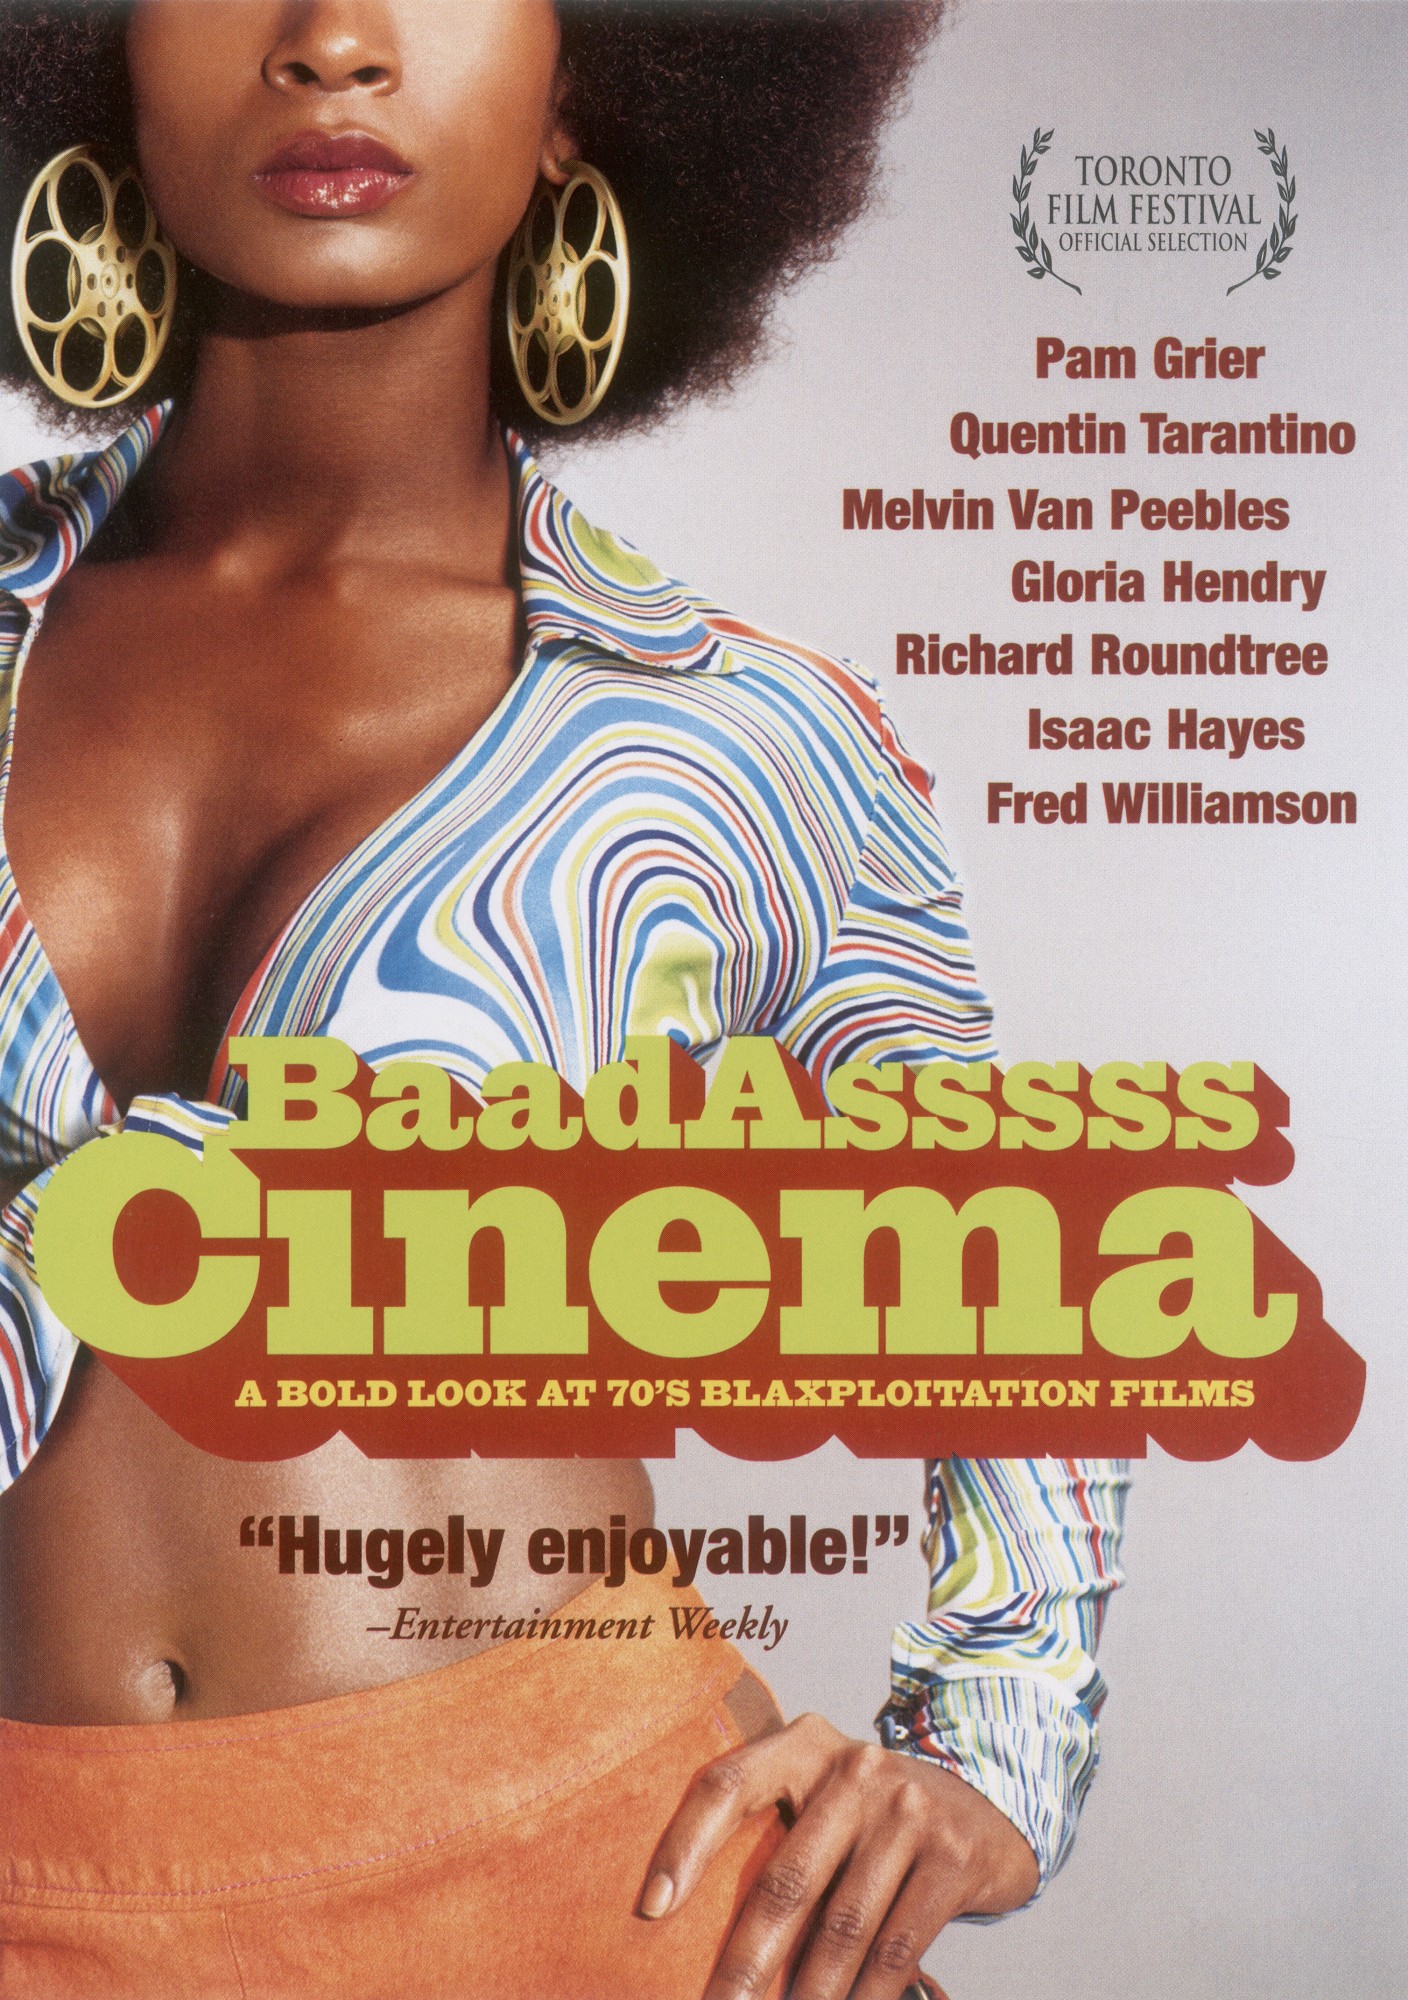 BaadAsssss Cinema Film Poster